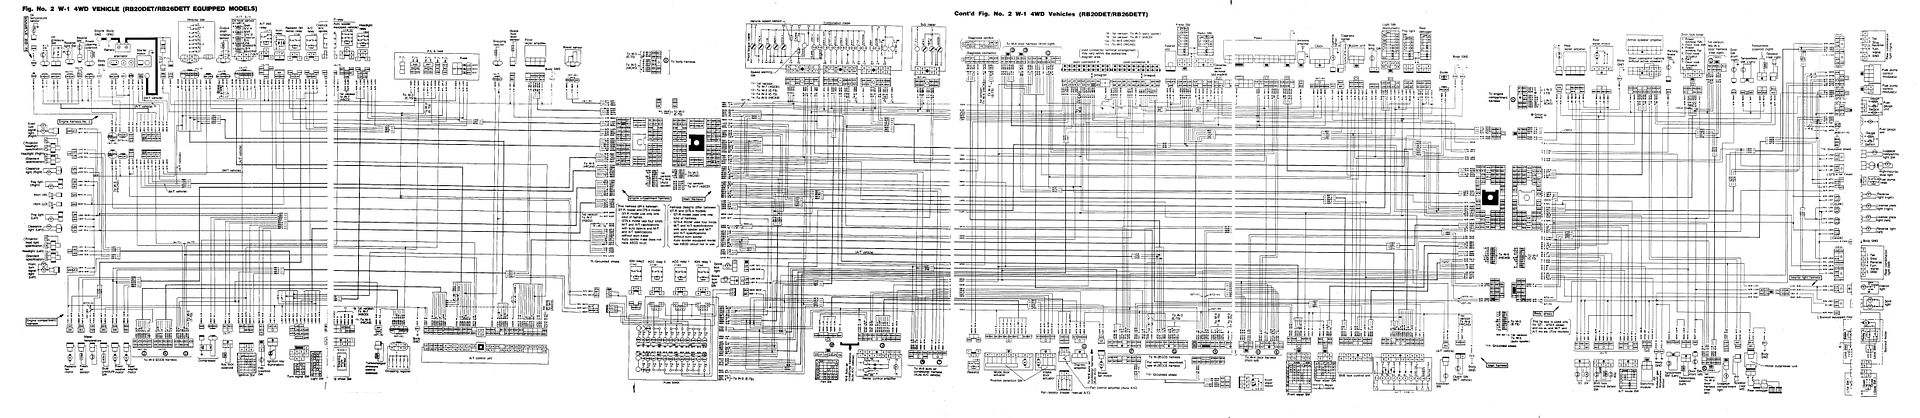 r31 skyline wiring diagram